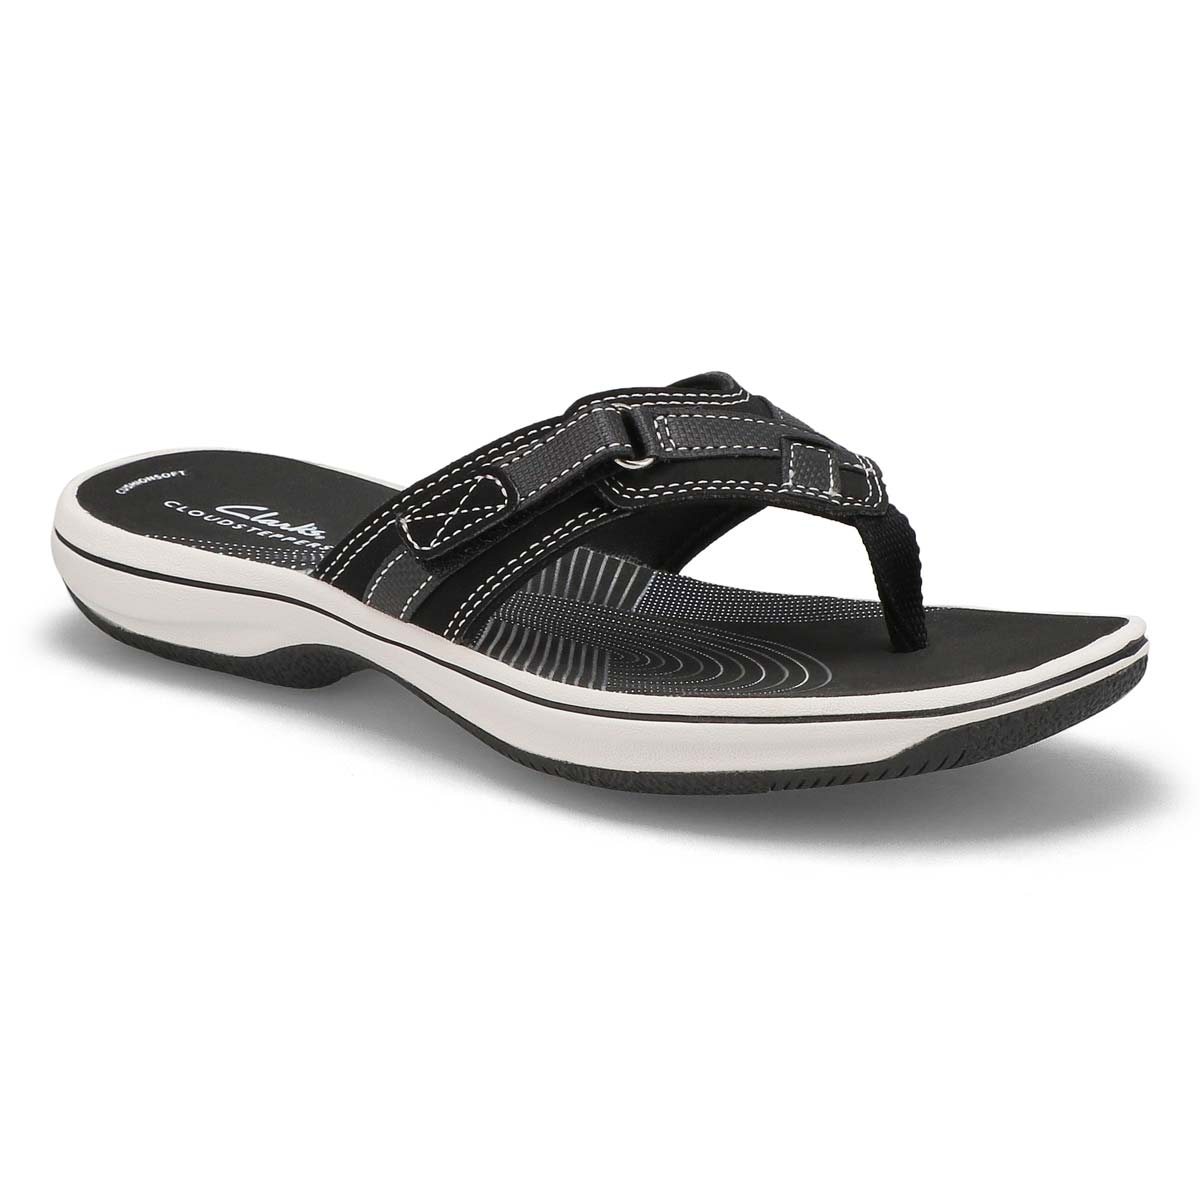 clarks women's sandals canada